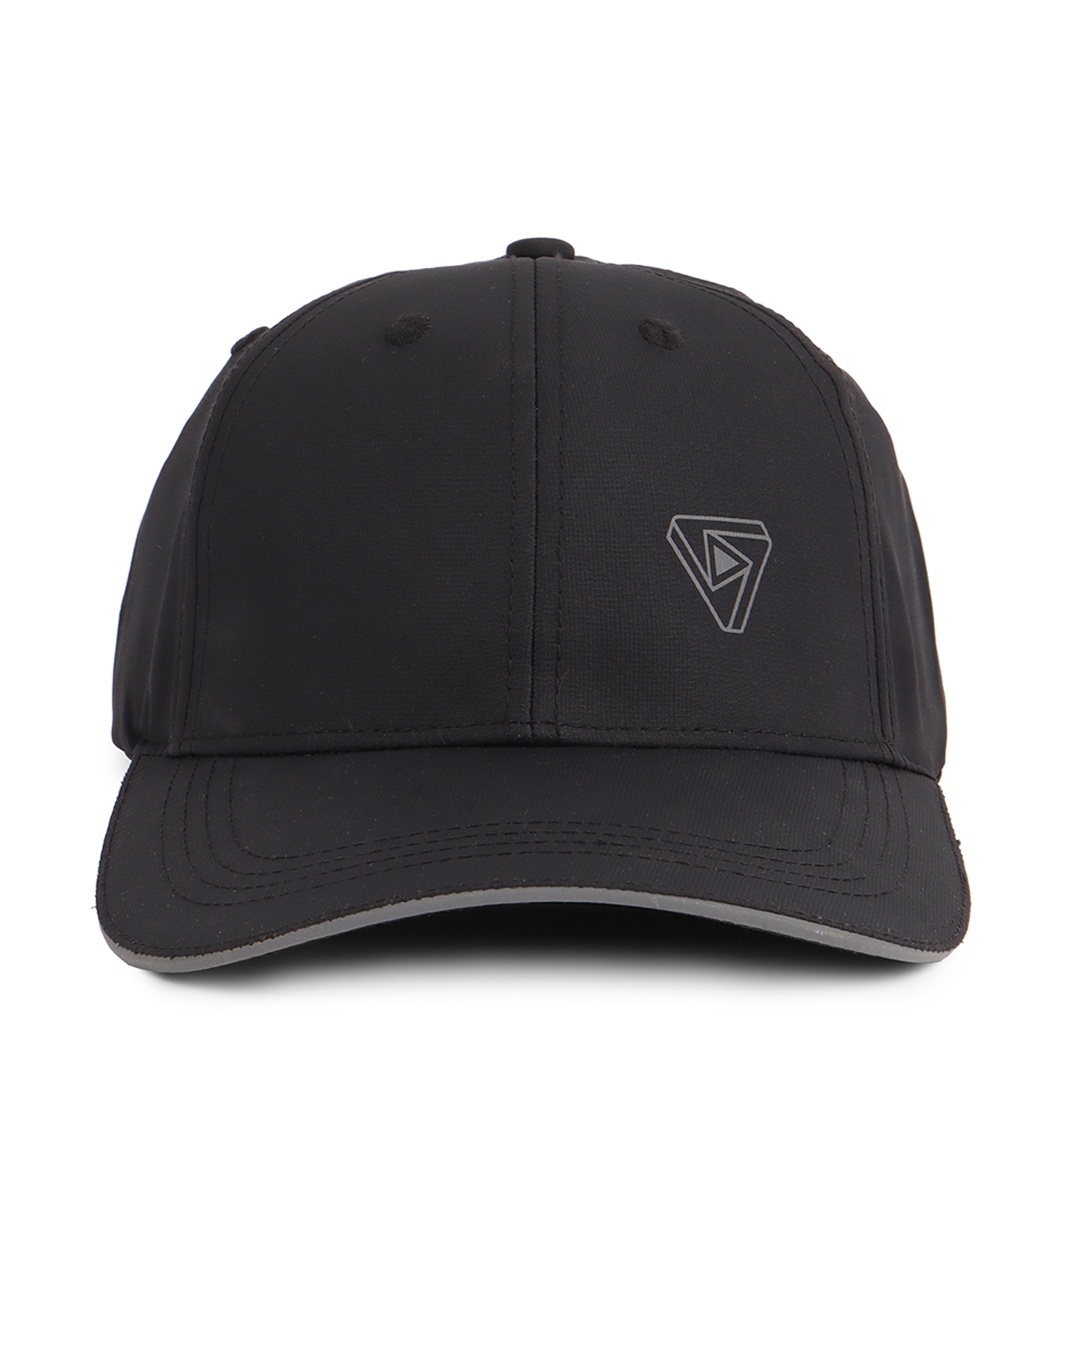 Shop Unisex Black Drycool Baseball Cap-Design